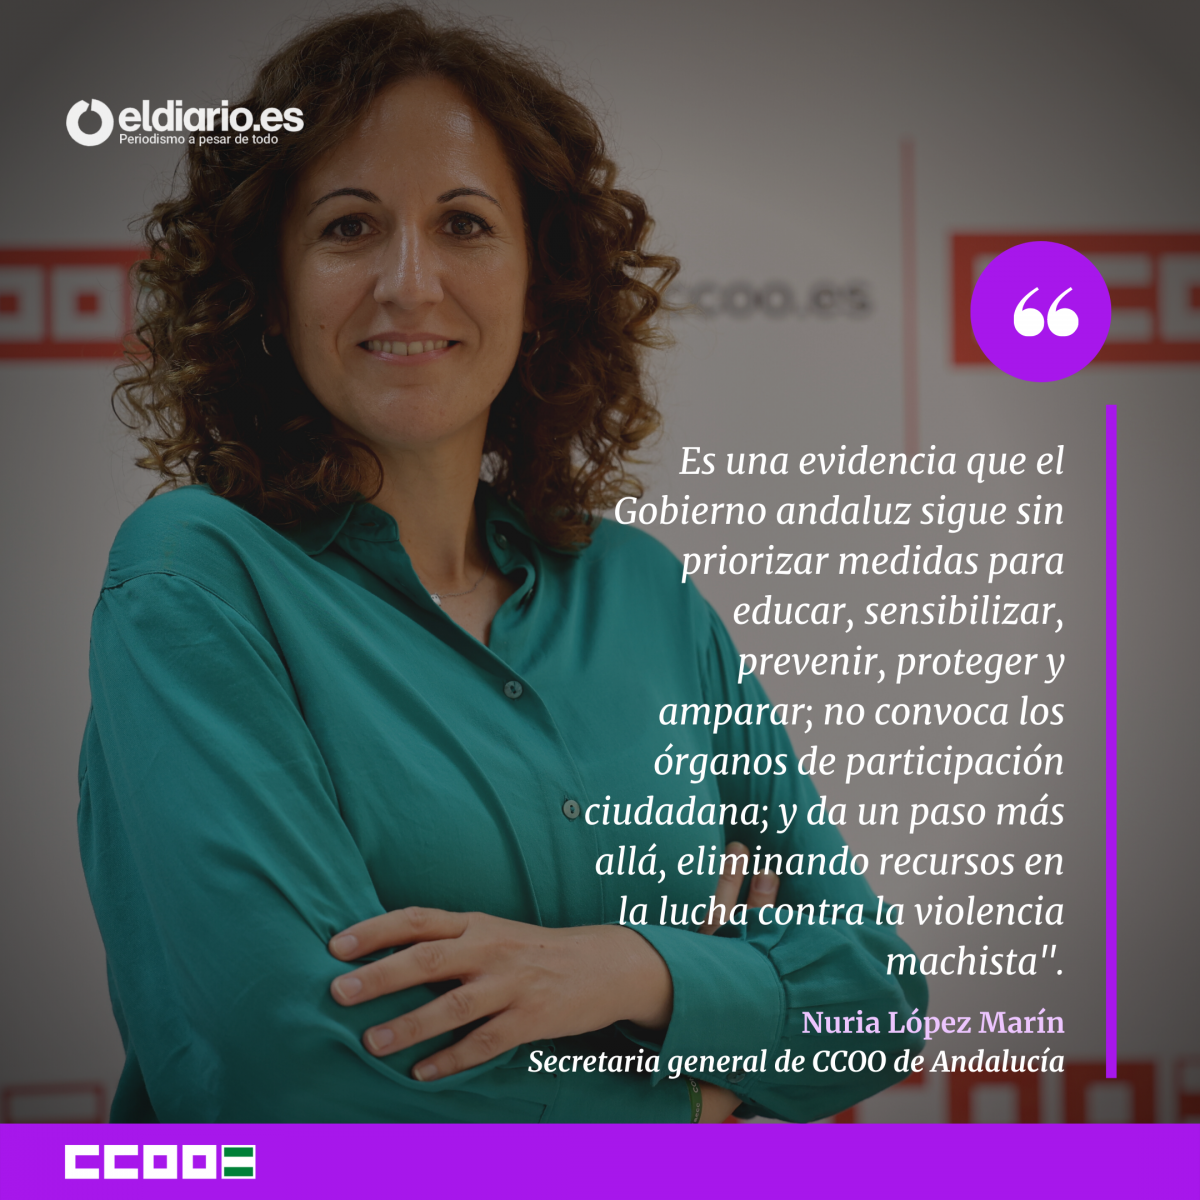 Nuria López Marín, secretaria general de CCOO de Andalucía